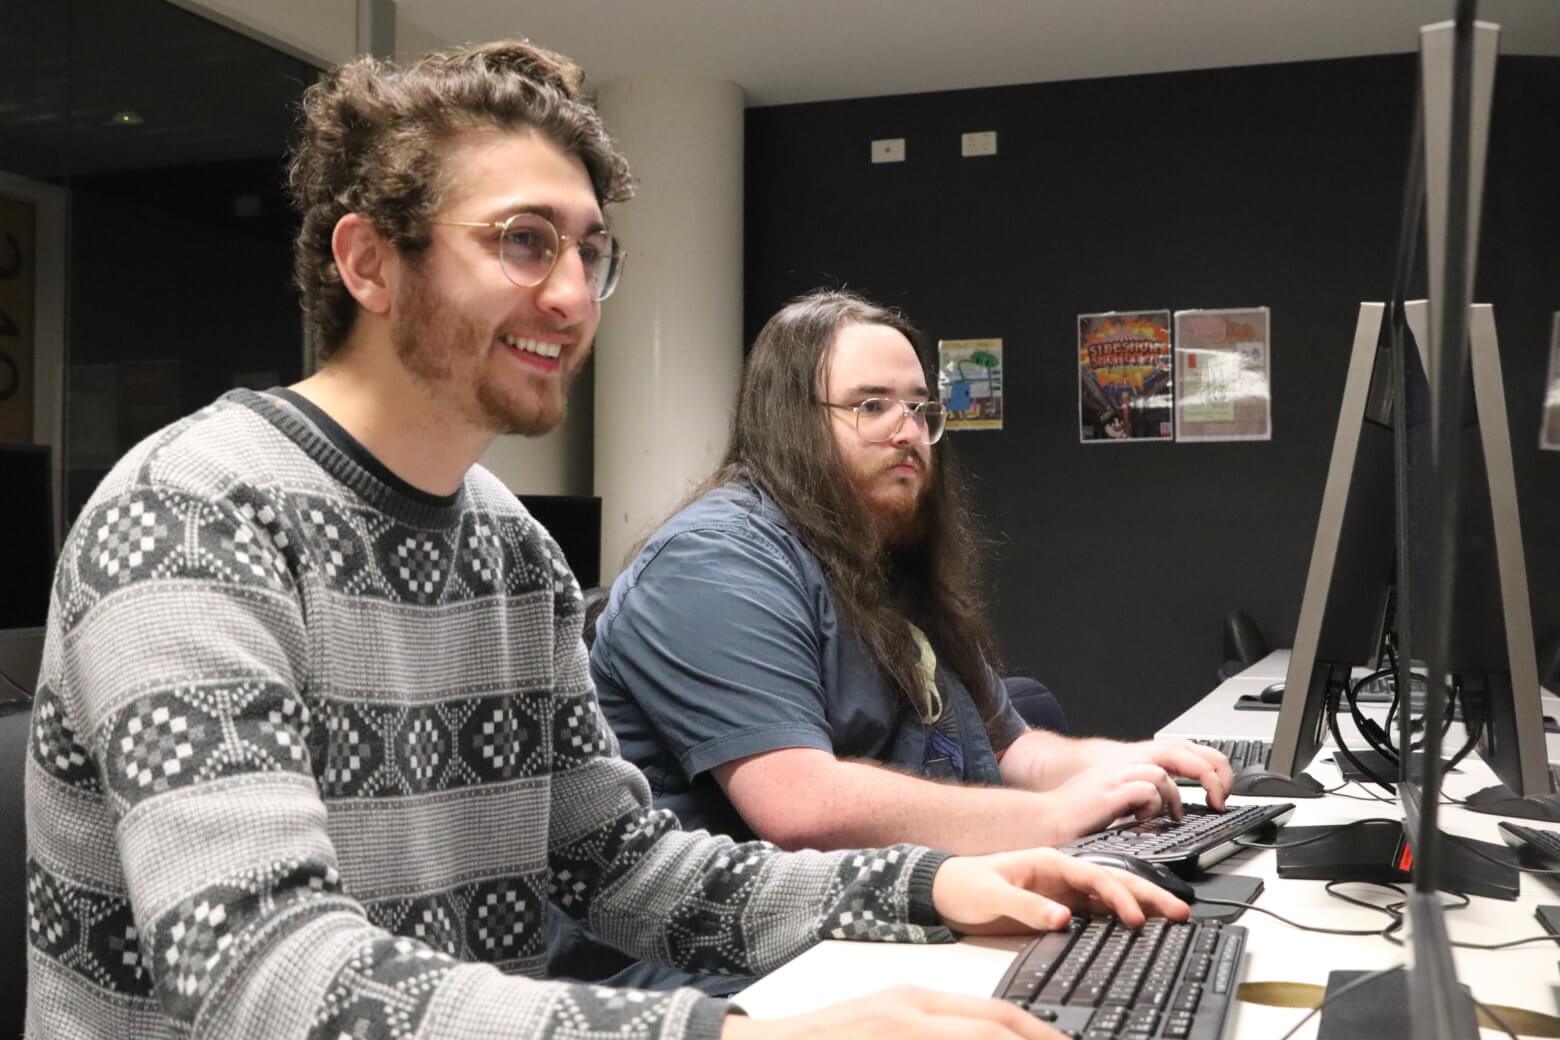 Game development students working